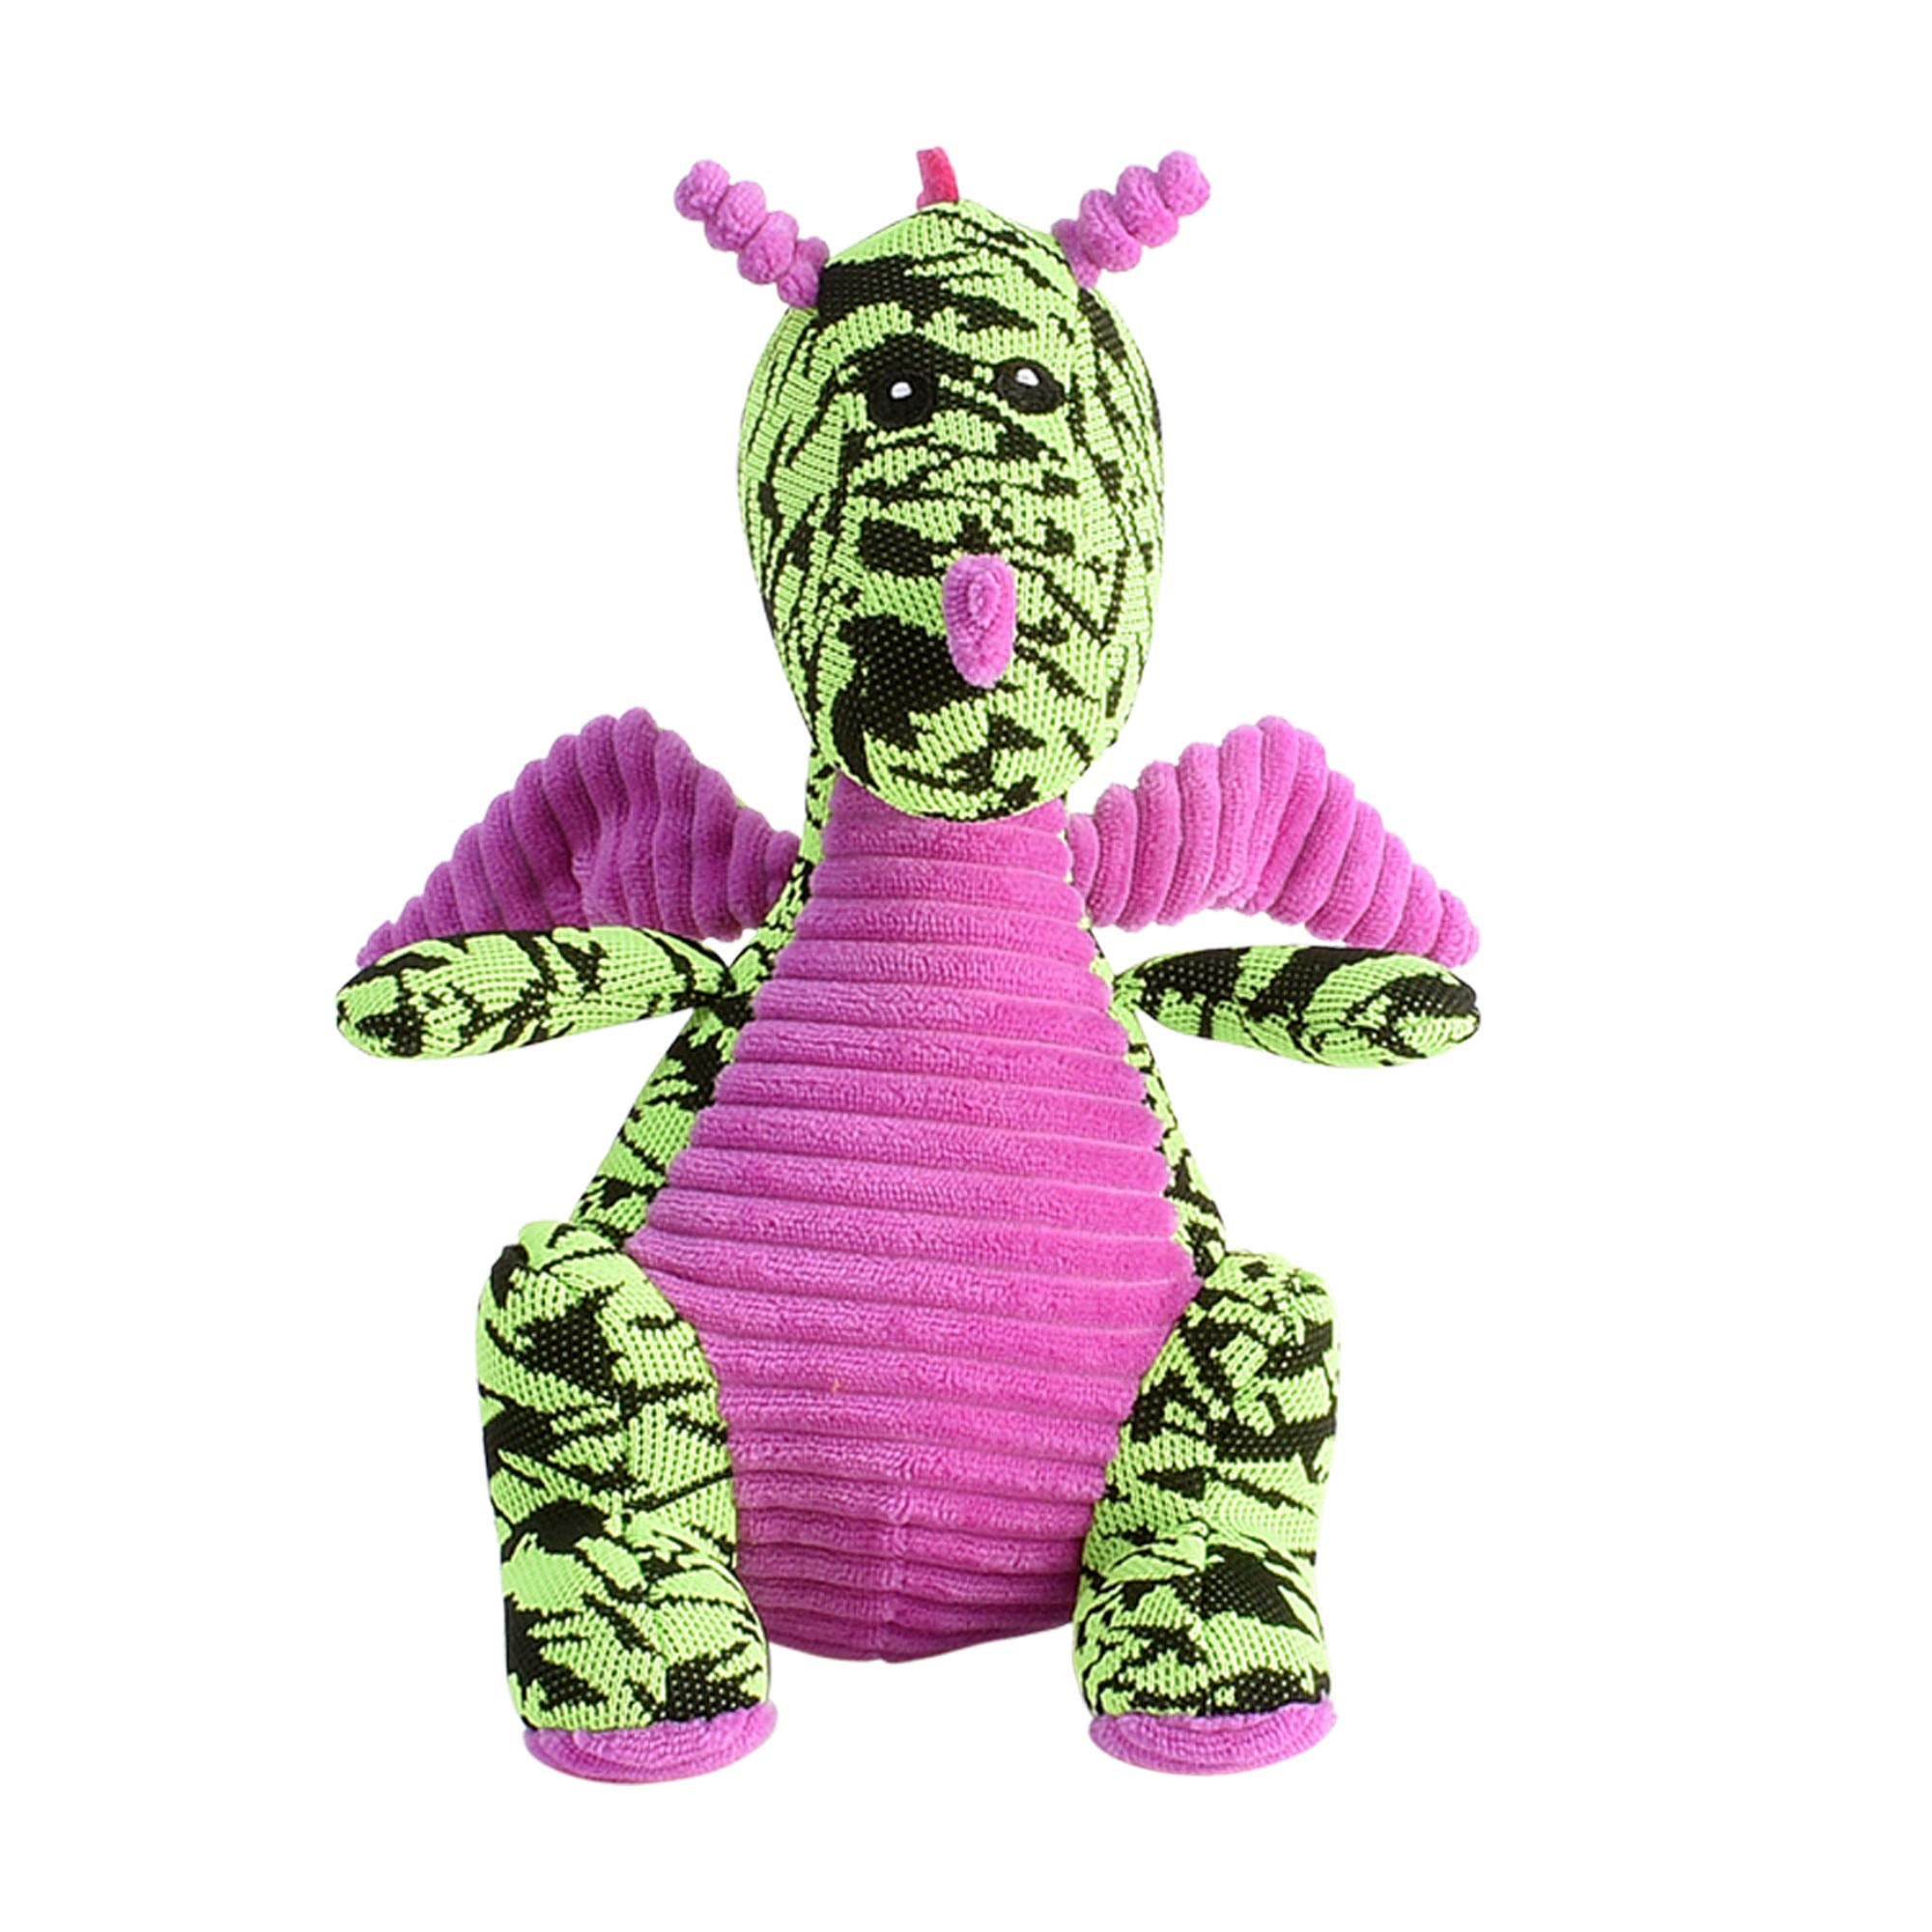 Multipet Retro Dragons Squeak and Plush Dog Toy - Assorted - 10